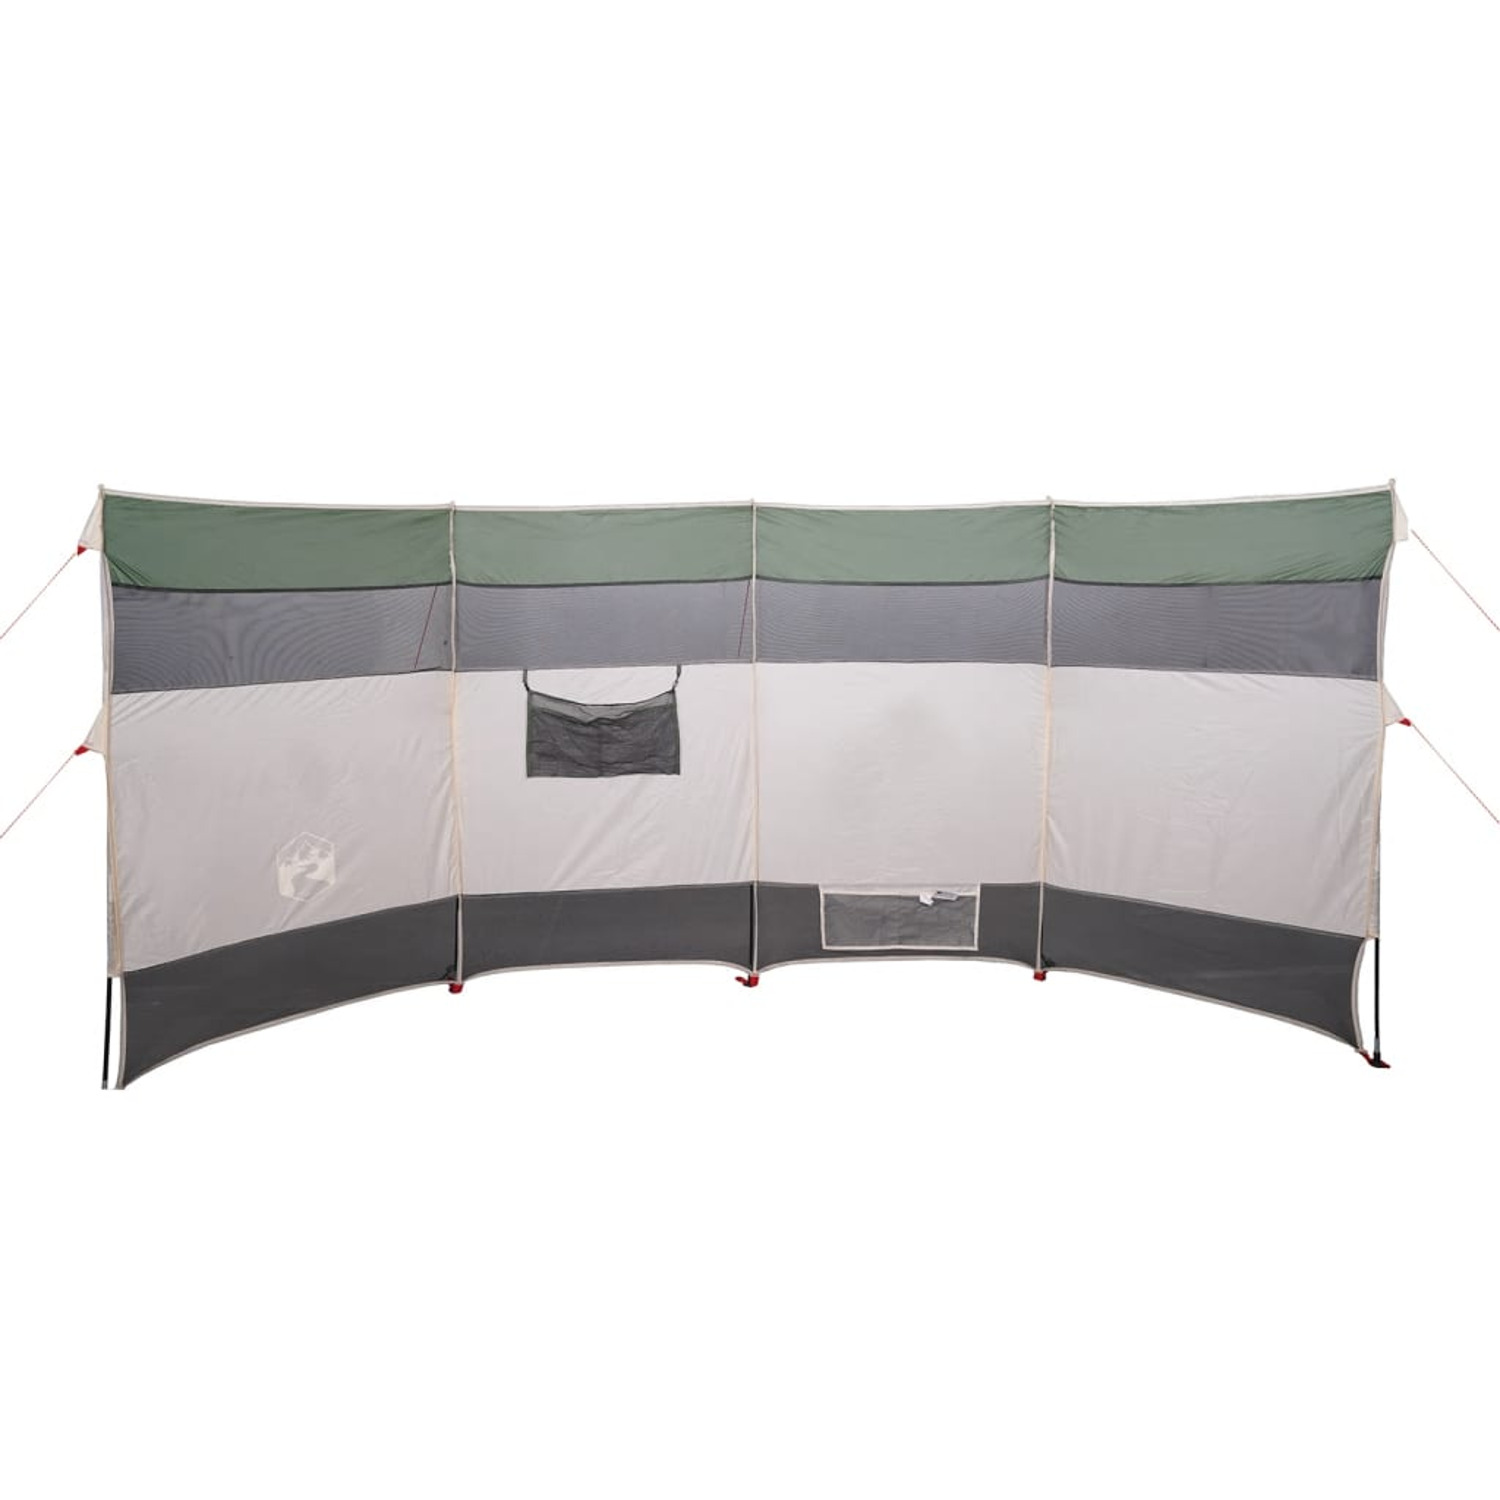 Cortaviento De Camping Impermeable Vidaxl 366x152x152 Cm - verde - 